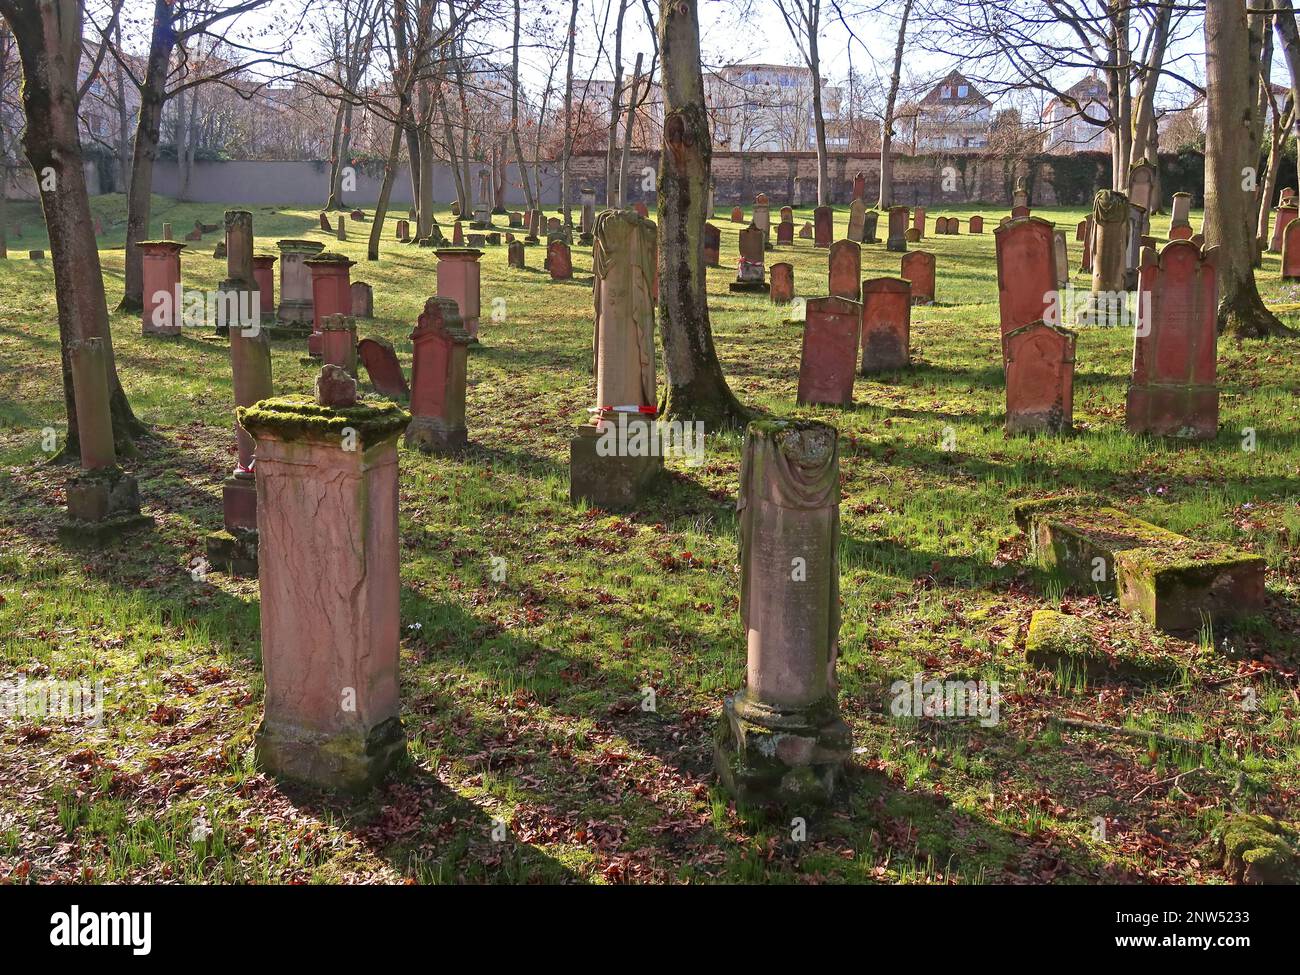 SHUM Old Medieval Jewish cemetery, Judensand , Mombacher Strasse. 61, 55122 Mainz, Rhineland-Palatinate, Germany Stock Photo